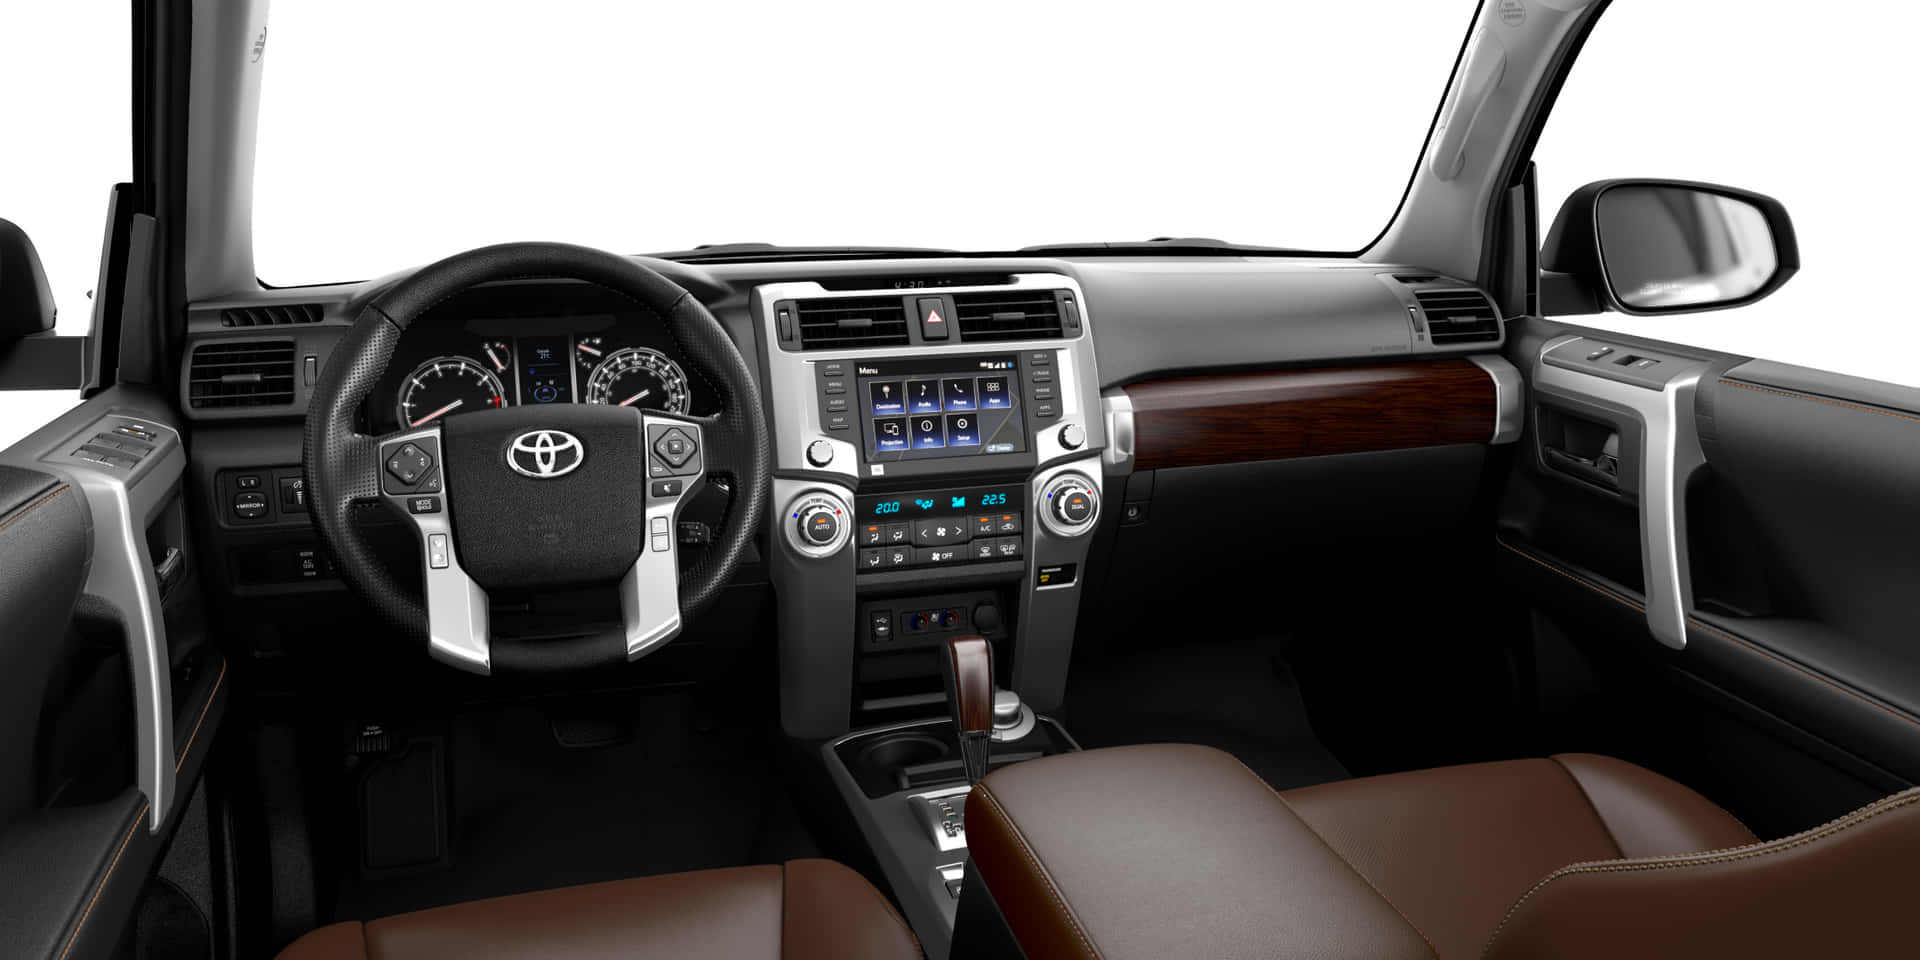 The Interior Of A Toyota Fj Cruiser